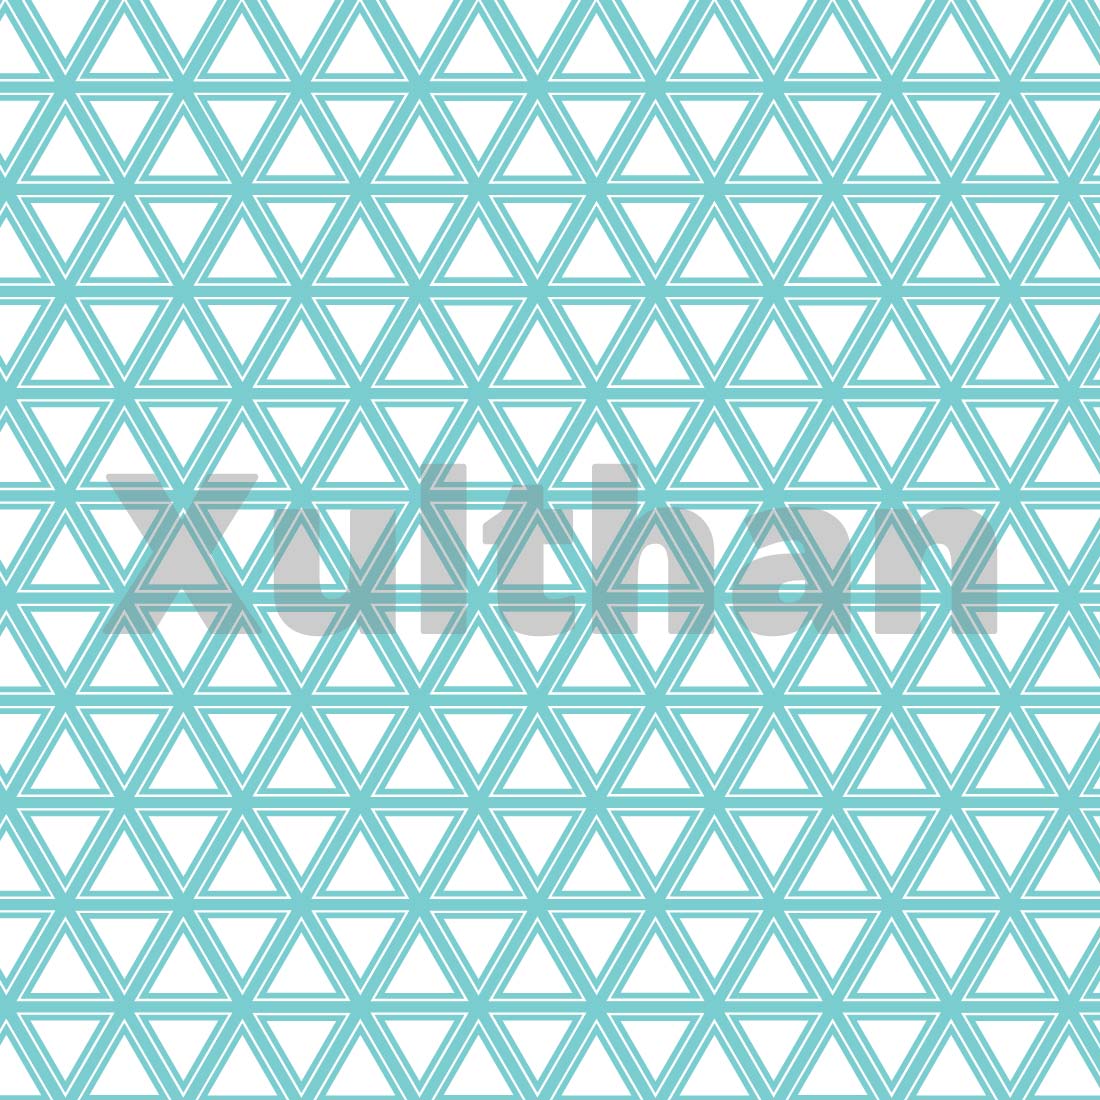 geometric traingle pattern preview image.